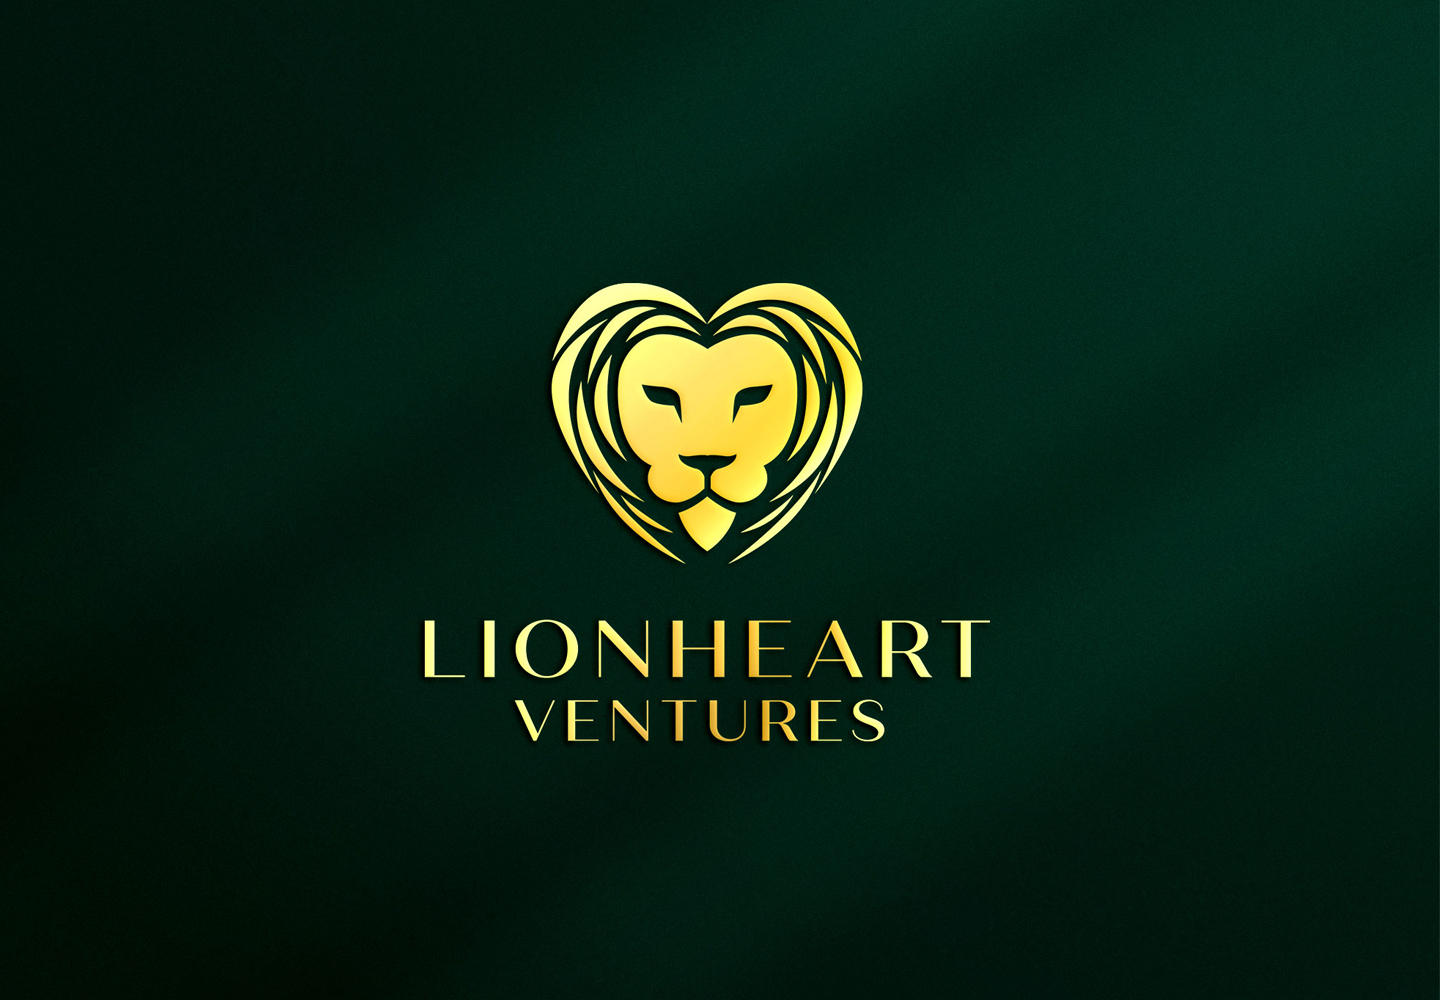 Lionheart Ventures Visual Identity